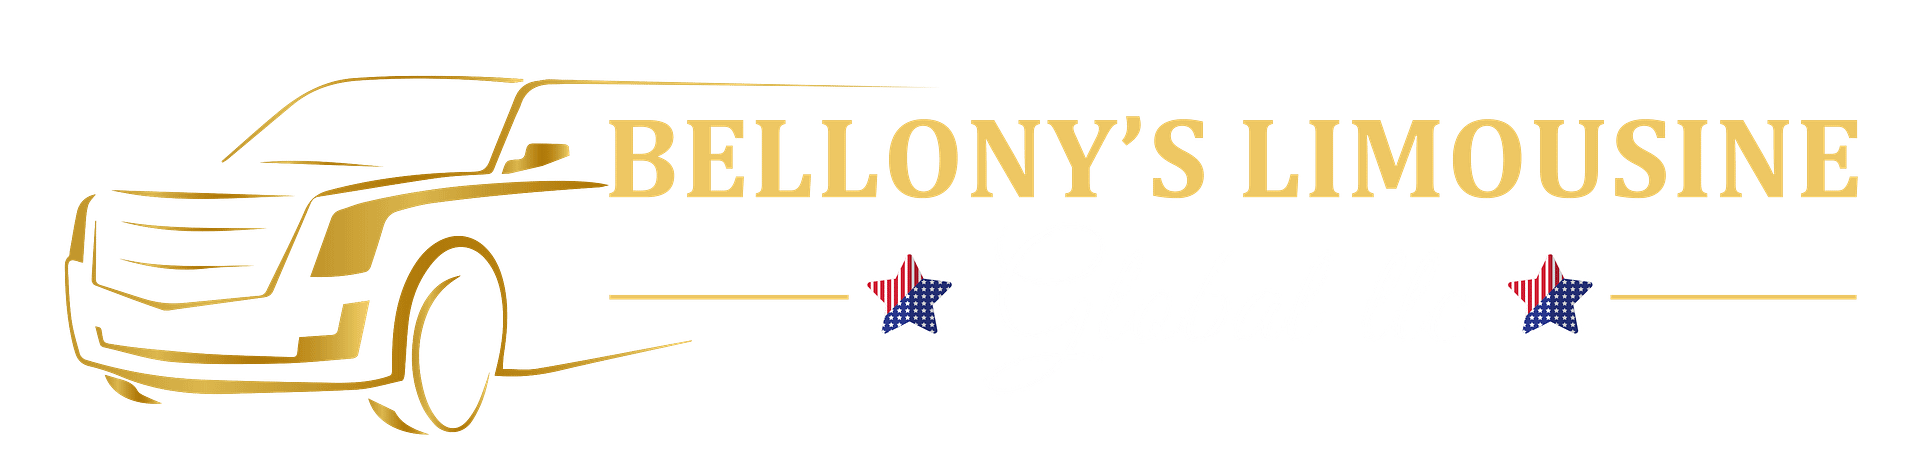 Bellony's limousine Service LLC